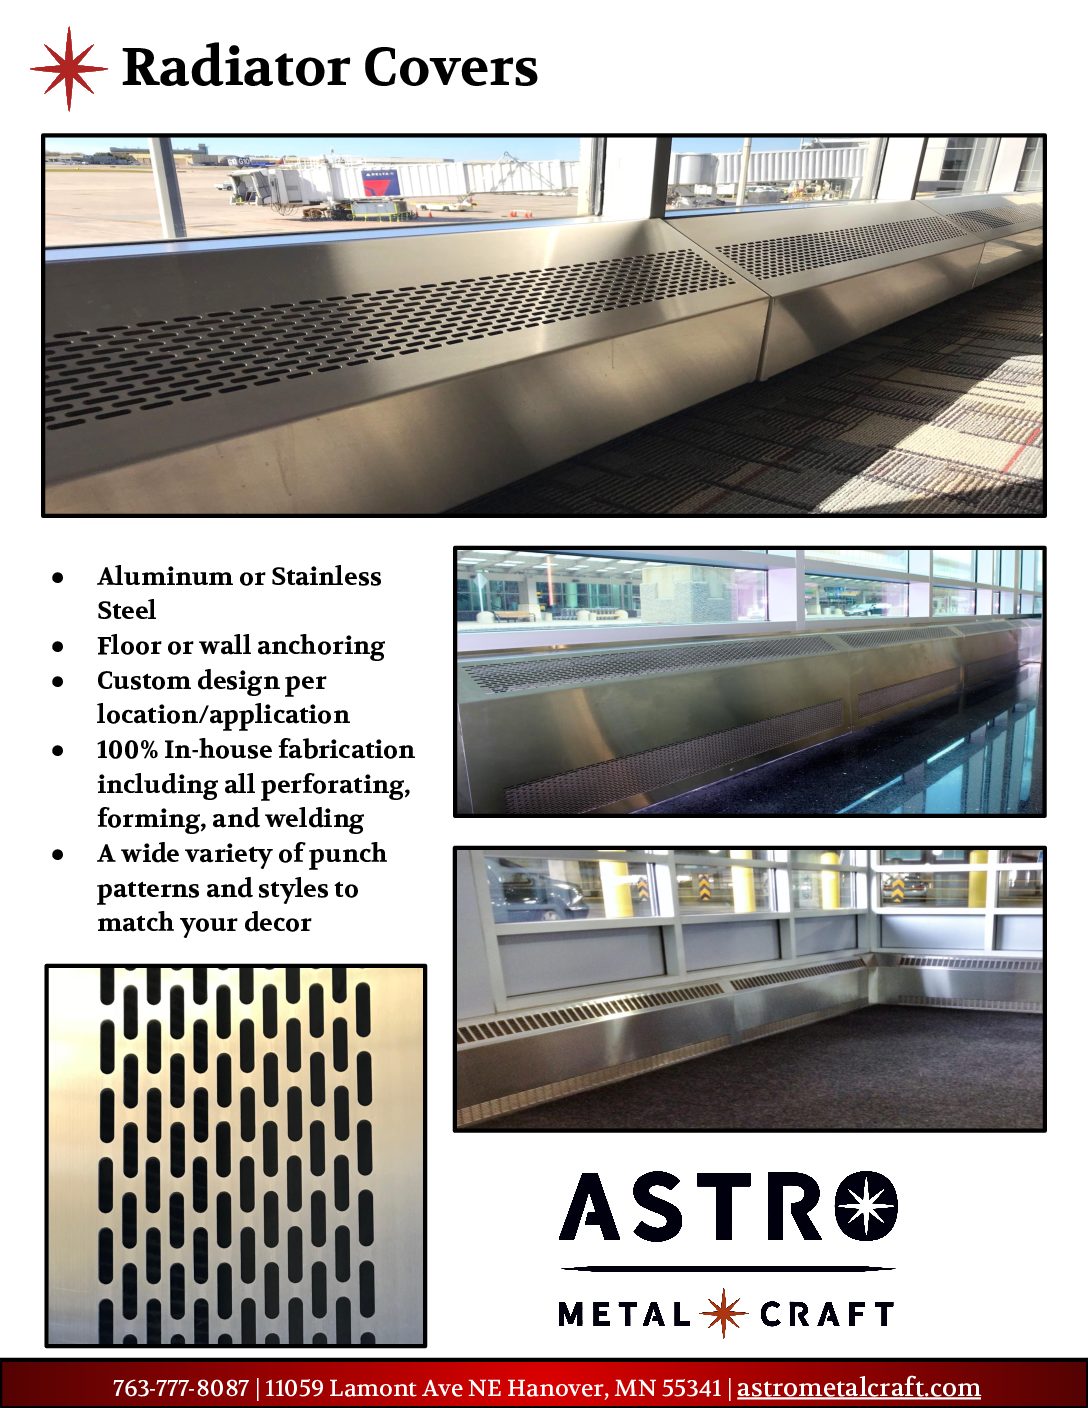 Astro Metal Craft – Radiator Covers Line Card